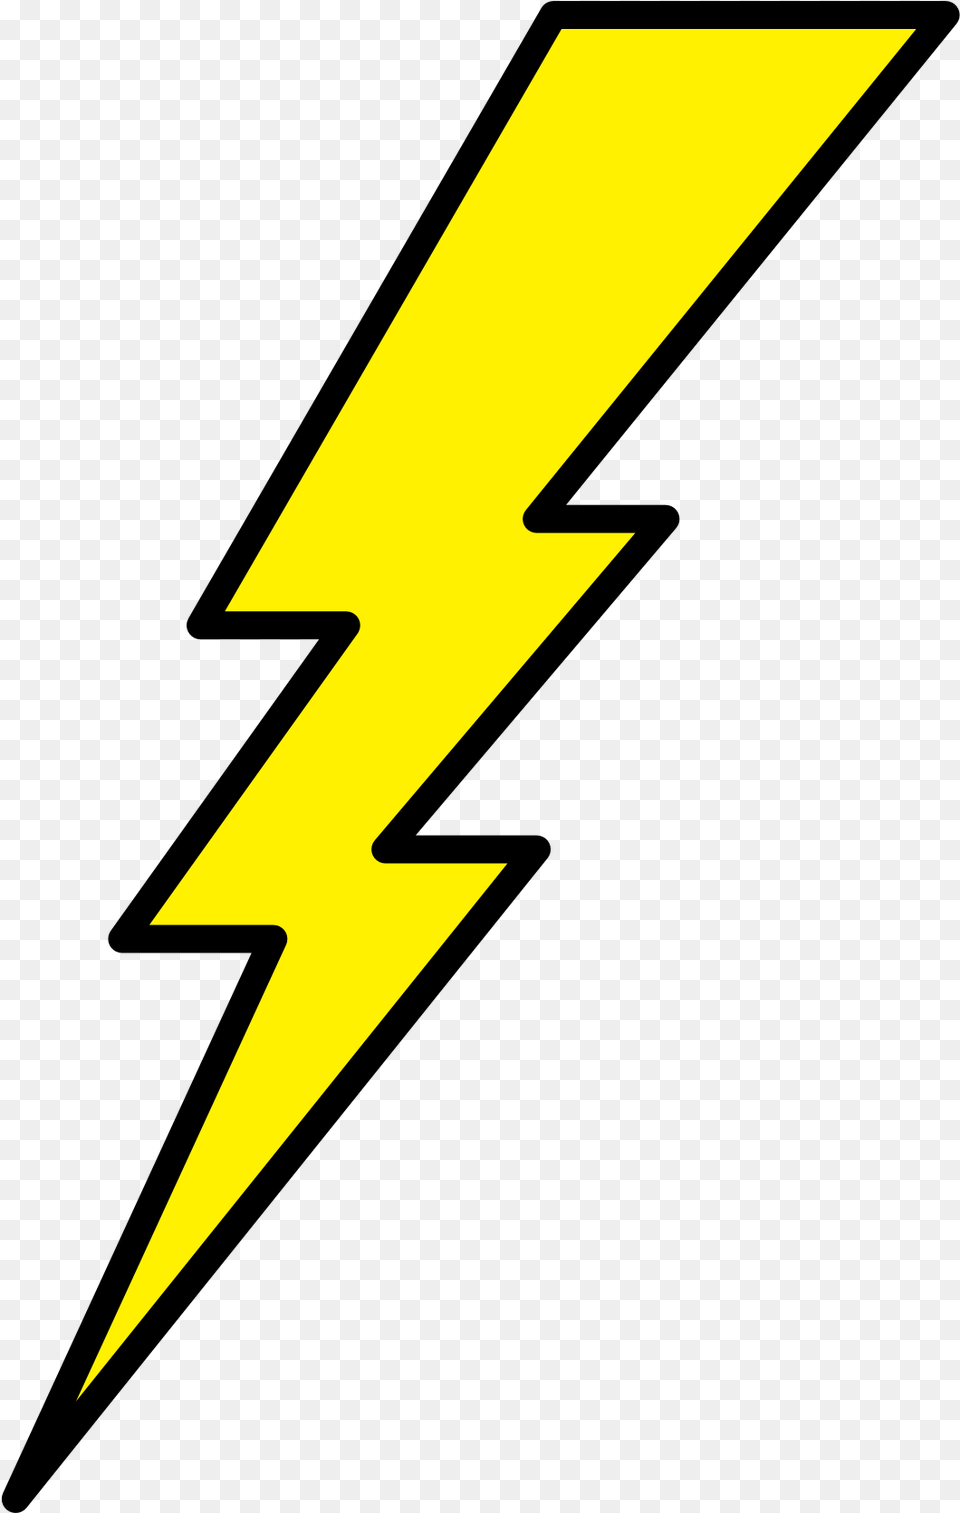 Fileharry Potter Lightningsvg Wikimedia Commons Harry Potter Lightning Bolt, Logo, Symbol, Blade, Dagger Free Png Download